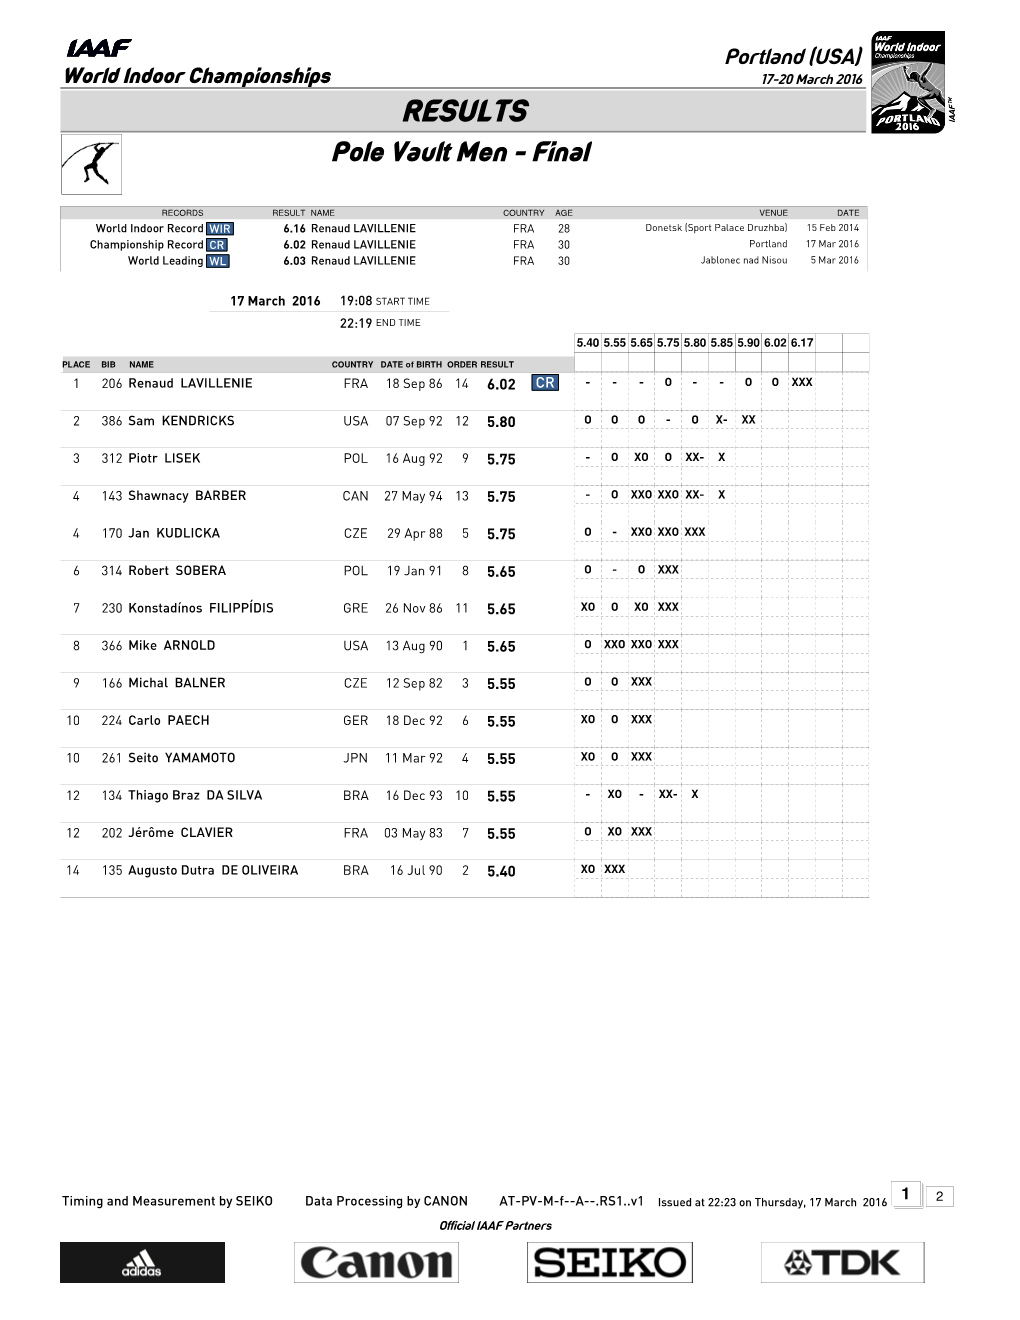 RESULTS Pole Vault Men - Final